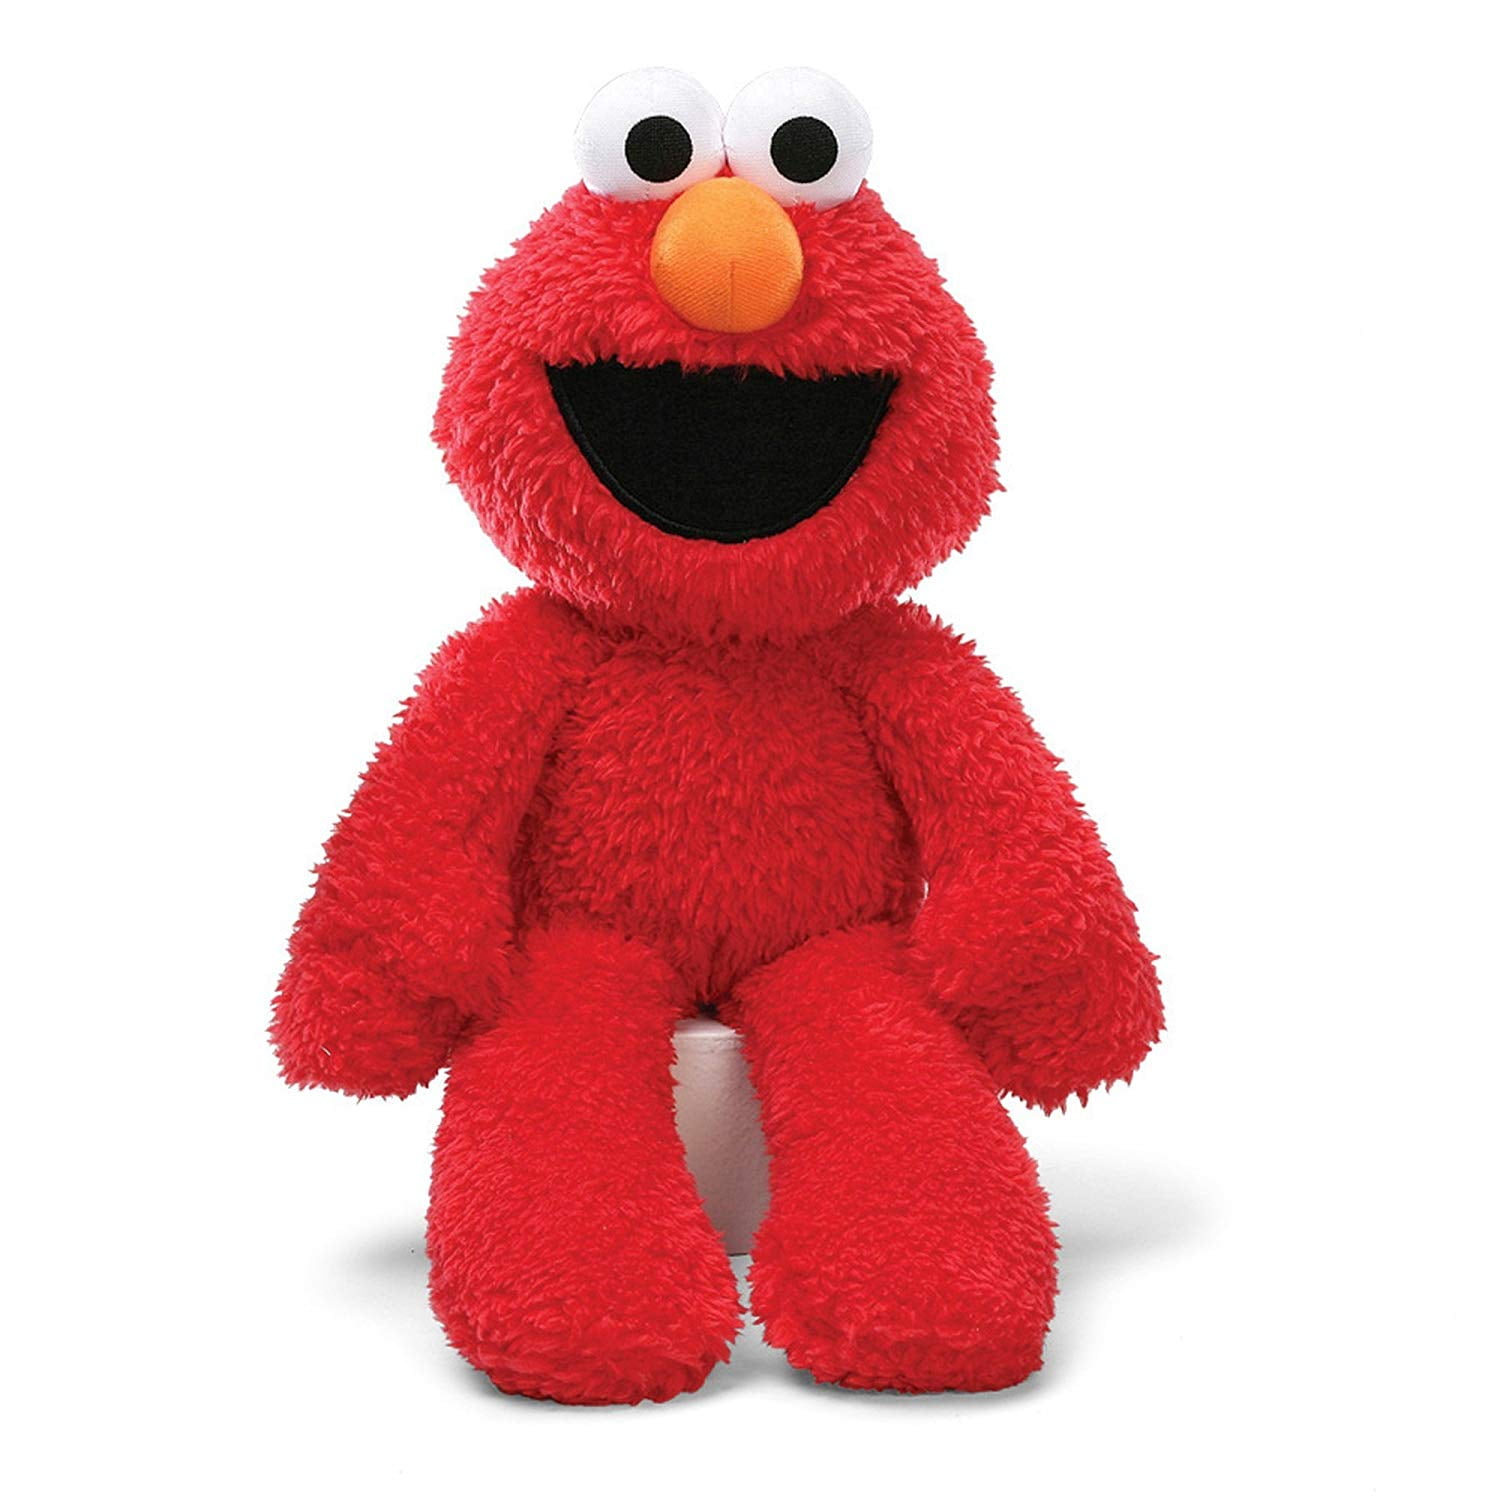 Gund Sesame Street 15 Inch Nursery Rhyme Elmo Plush for sale online 